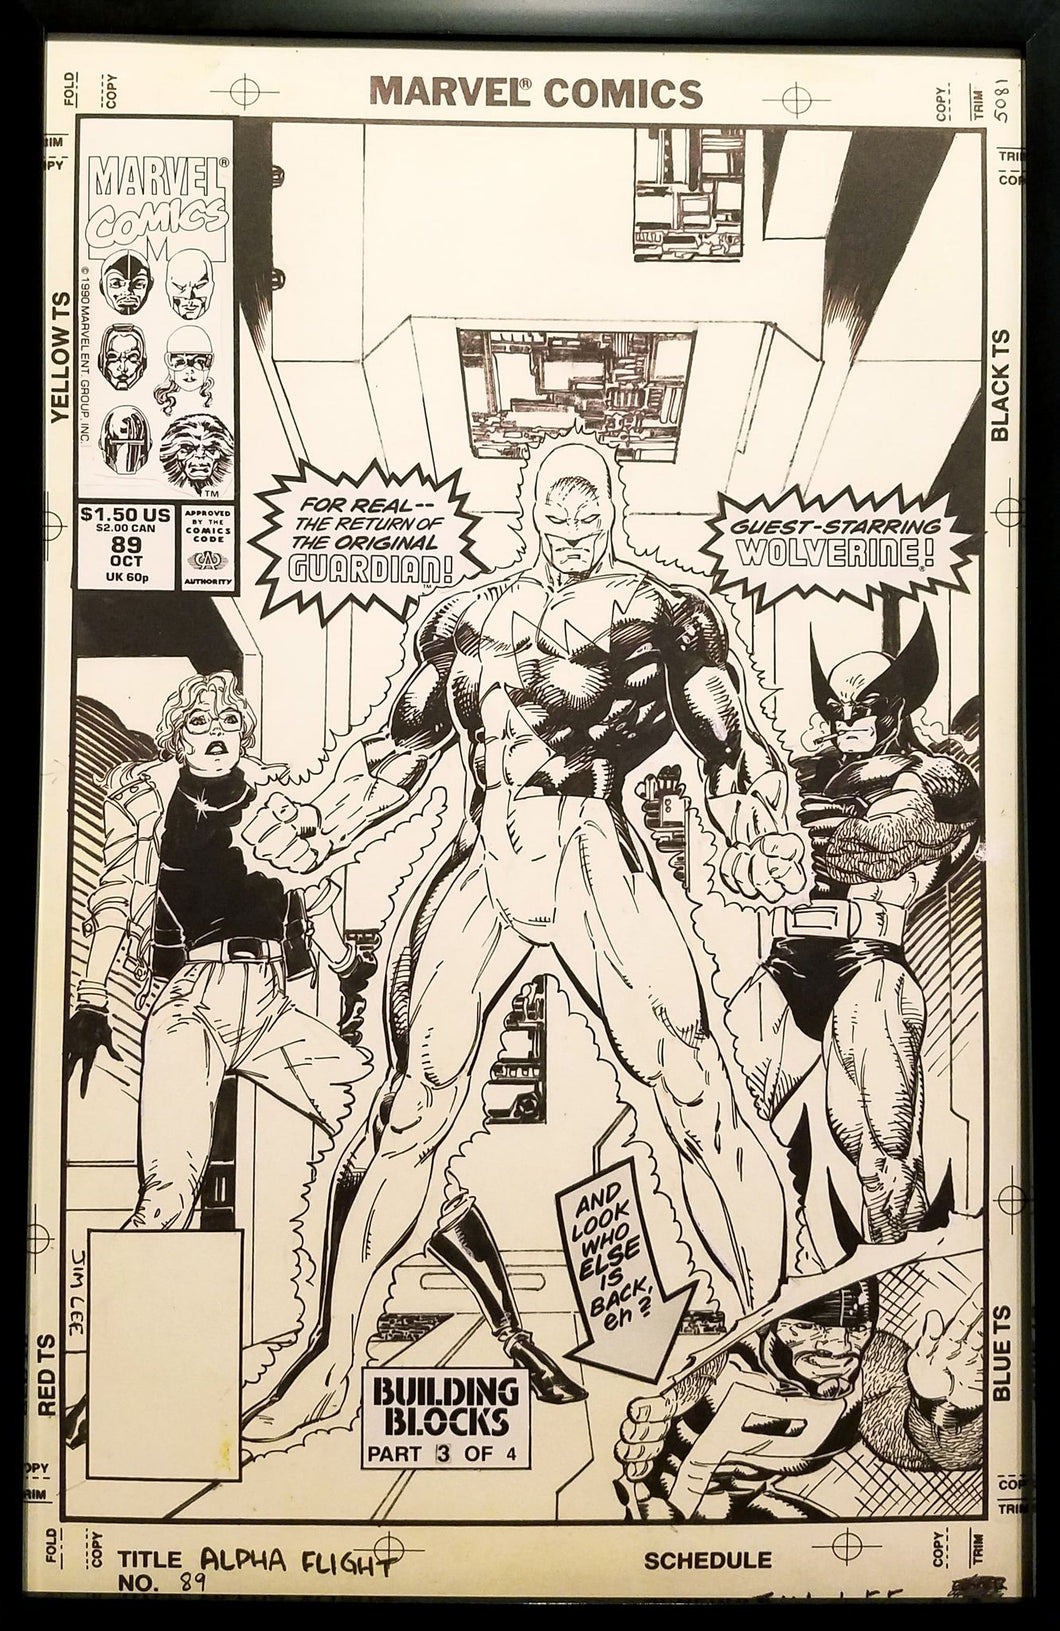 Alpha Flight #89 by Jim Lee 11x17 FRAMED Original Art Poster Marvel Comics